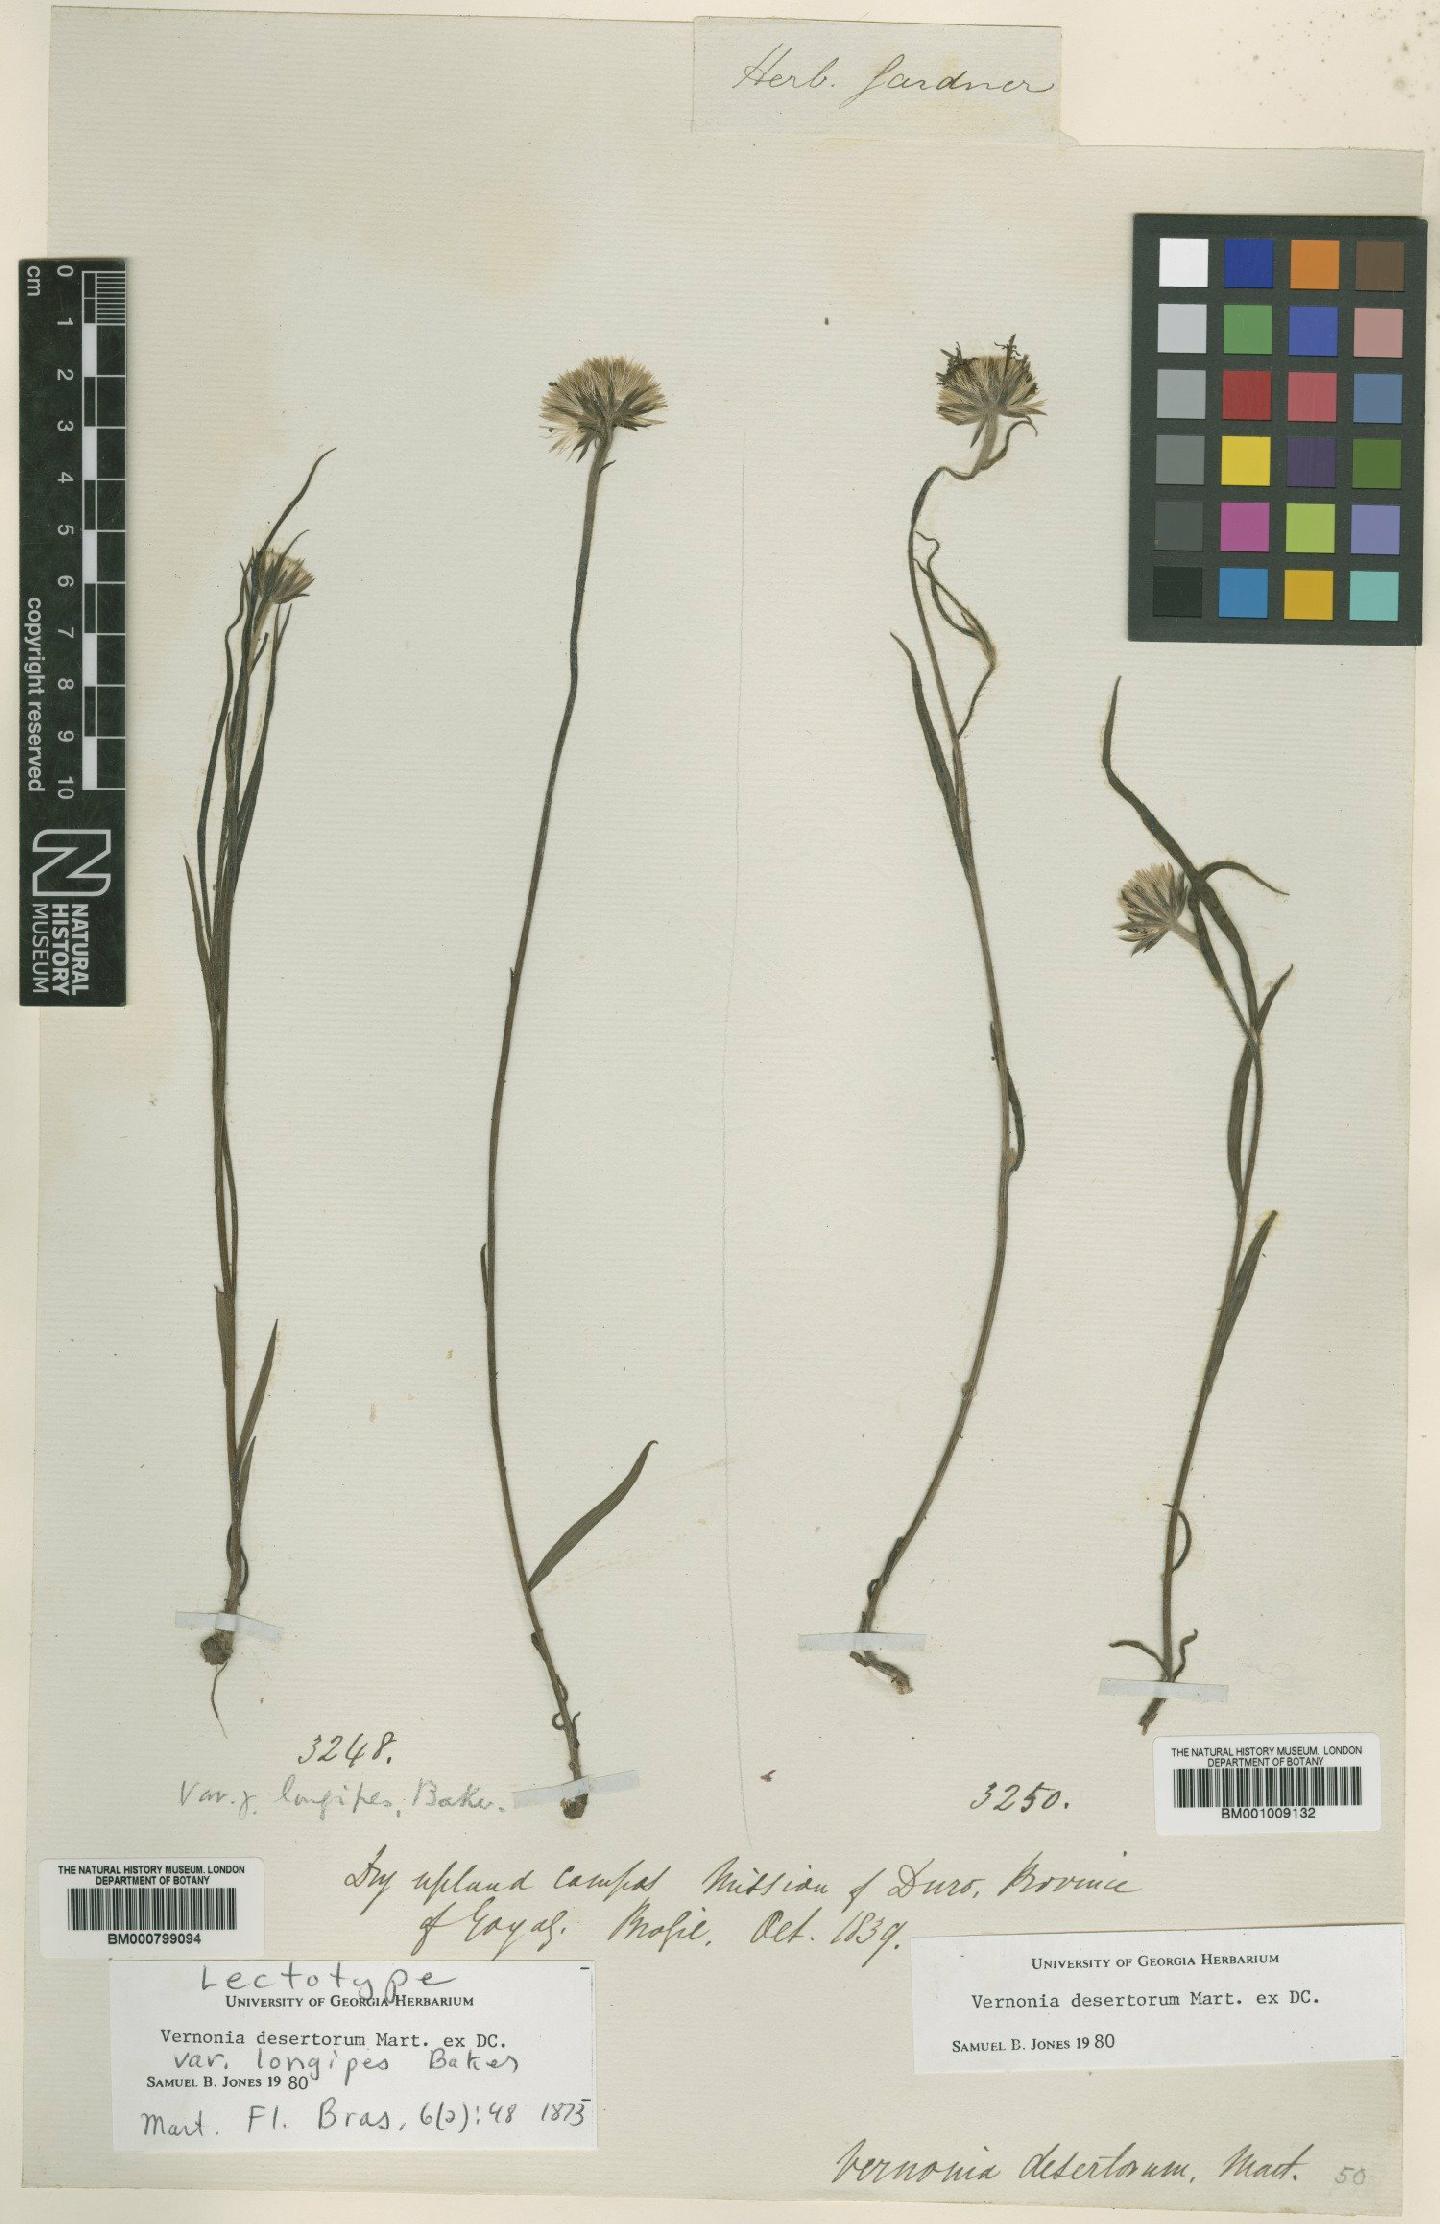 To NHMUK collection (Vernonia desertorum Mart. ex DC.; Lectotype; NHMUK:ecatalogue:4991426)